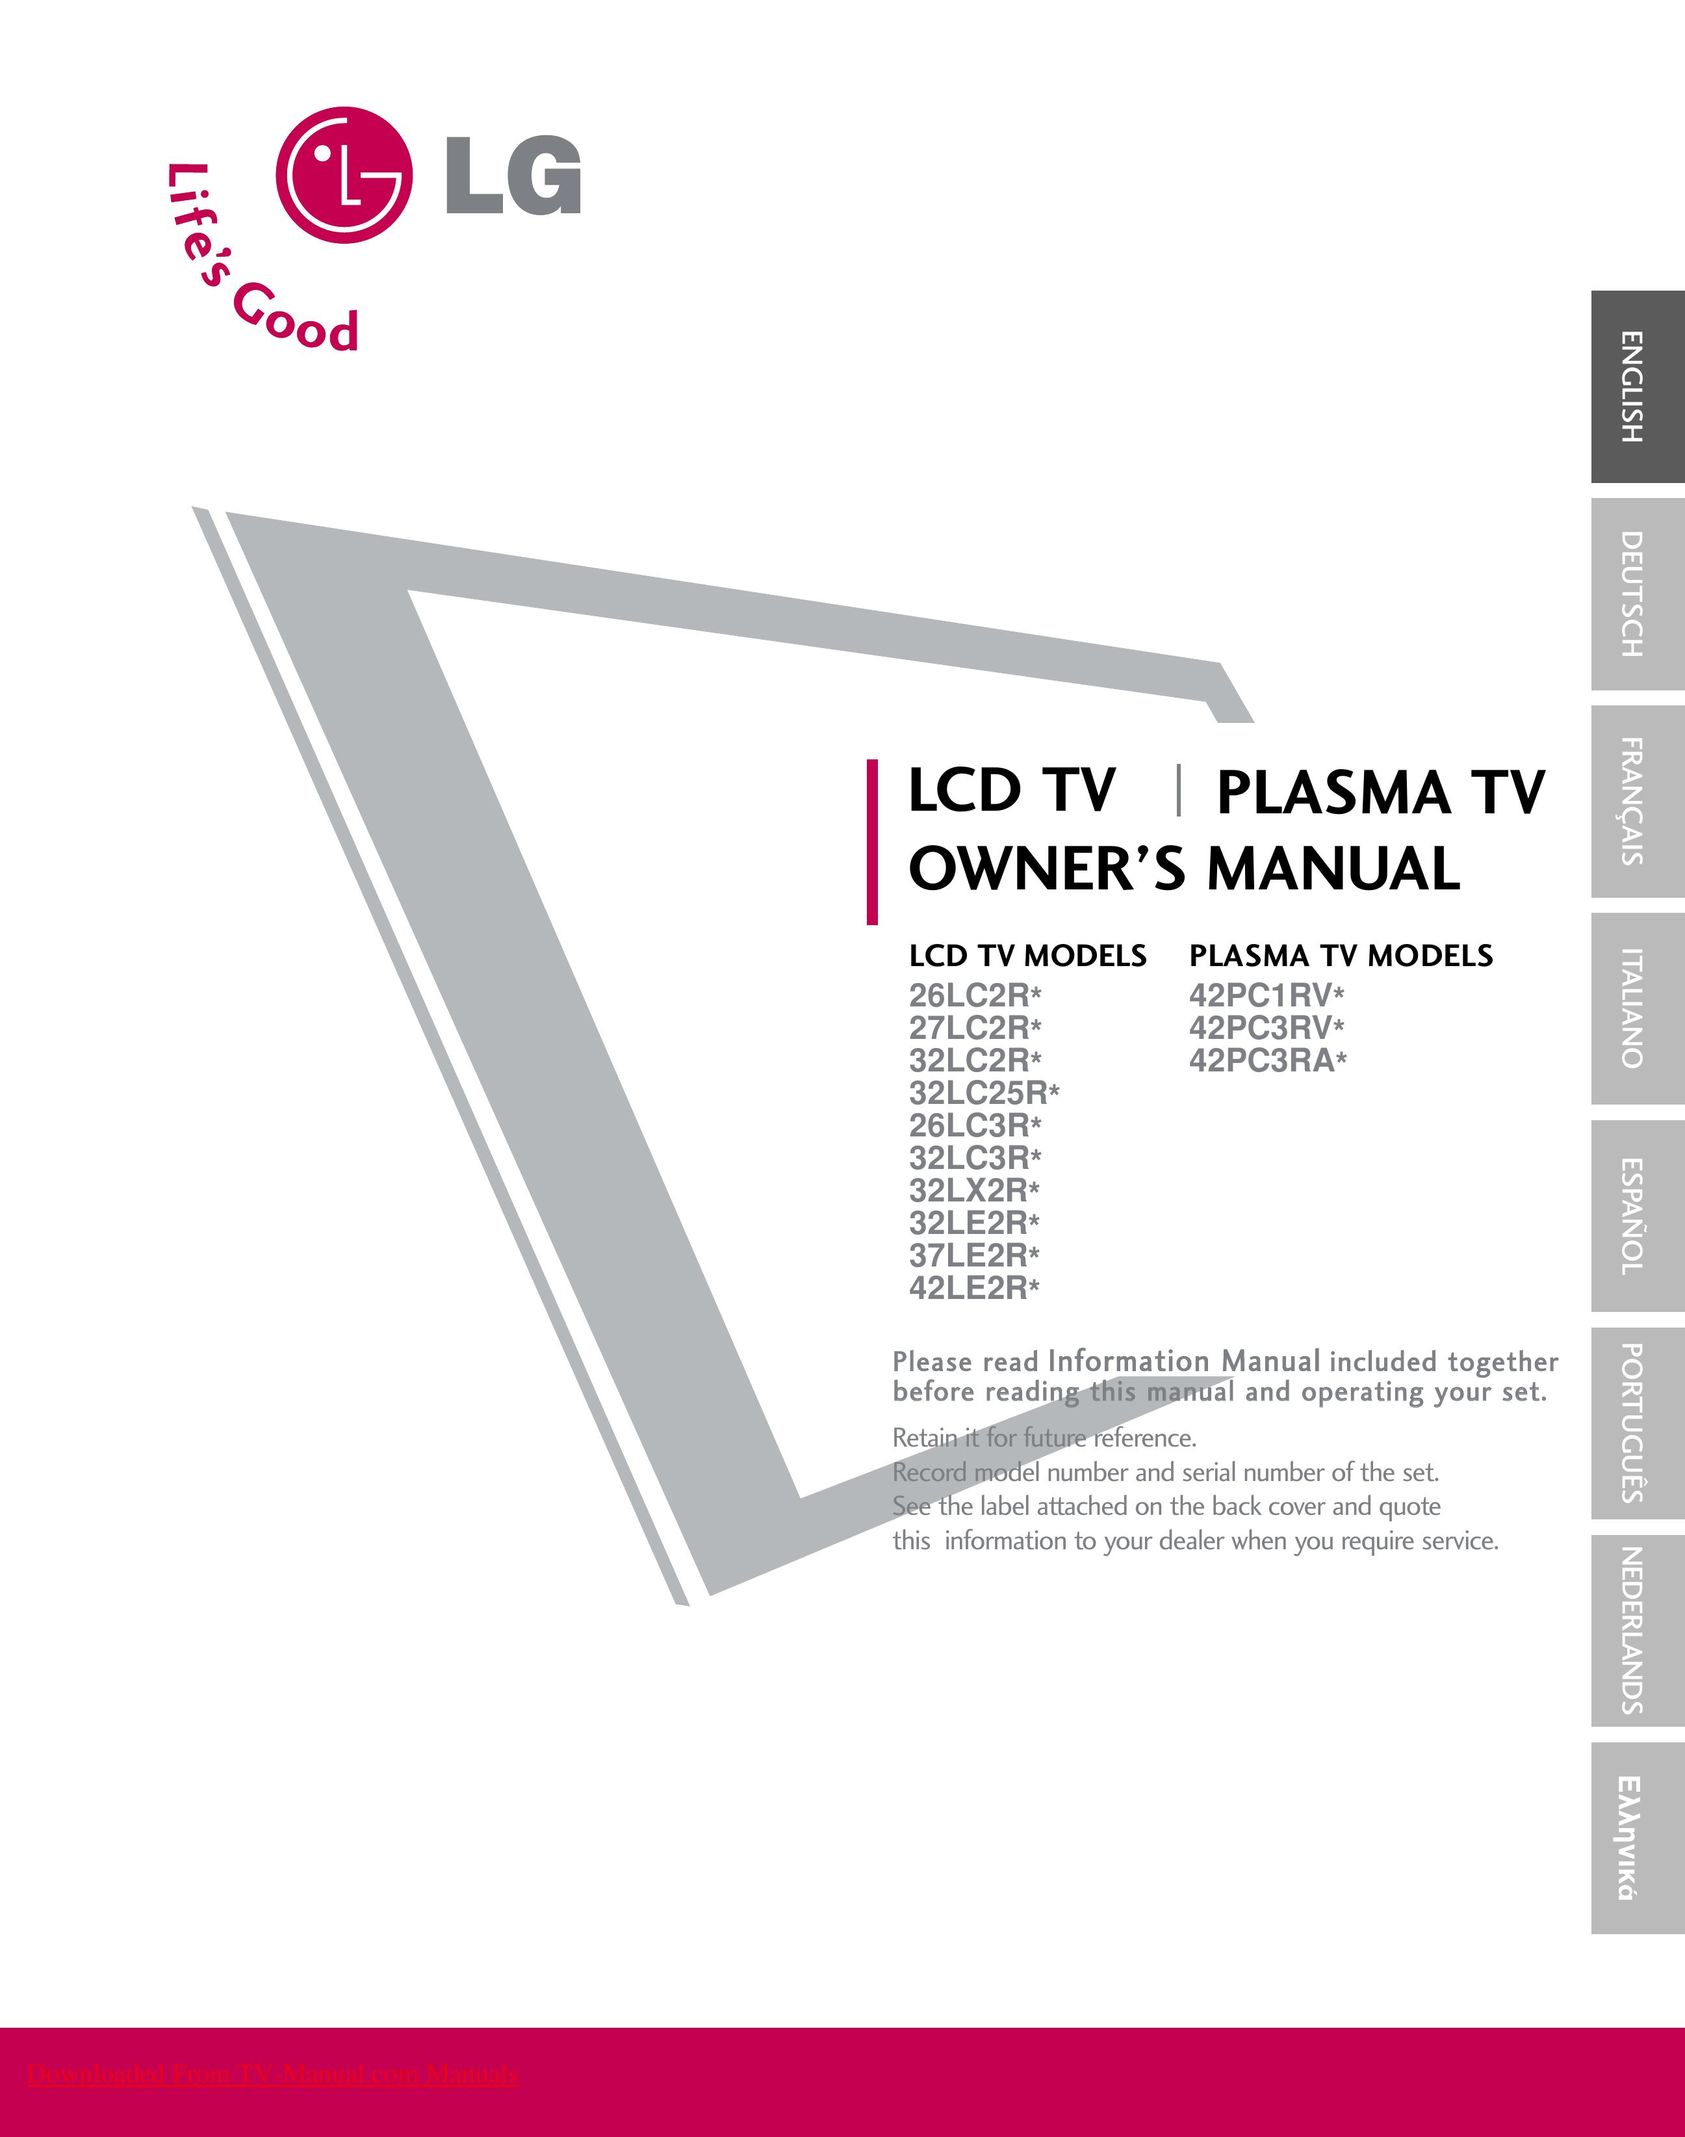 LG Electronics 42LE2R* TV Antenna User Manual